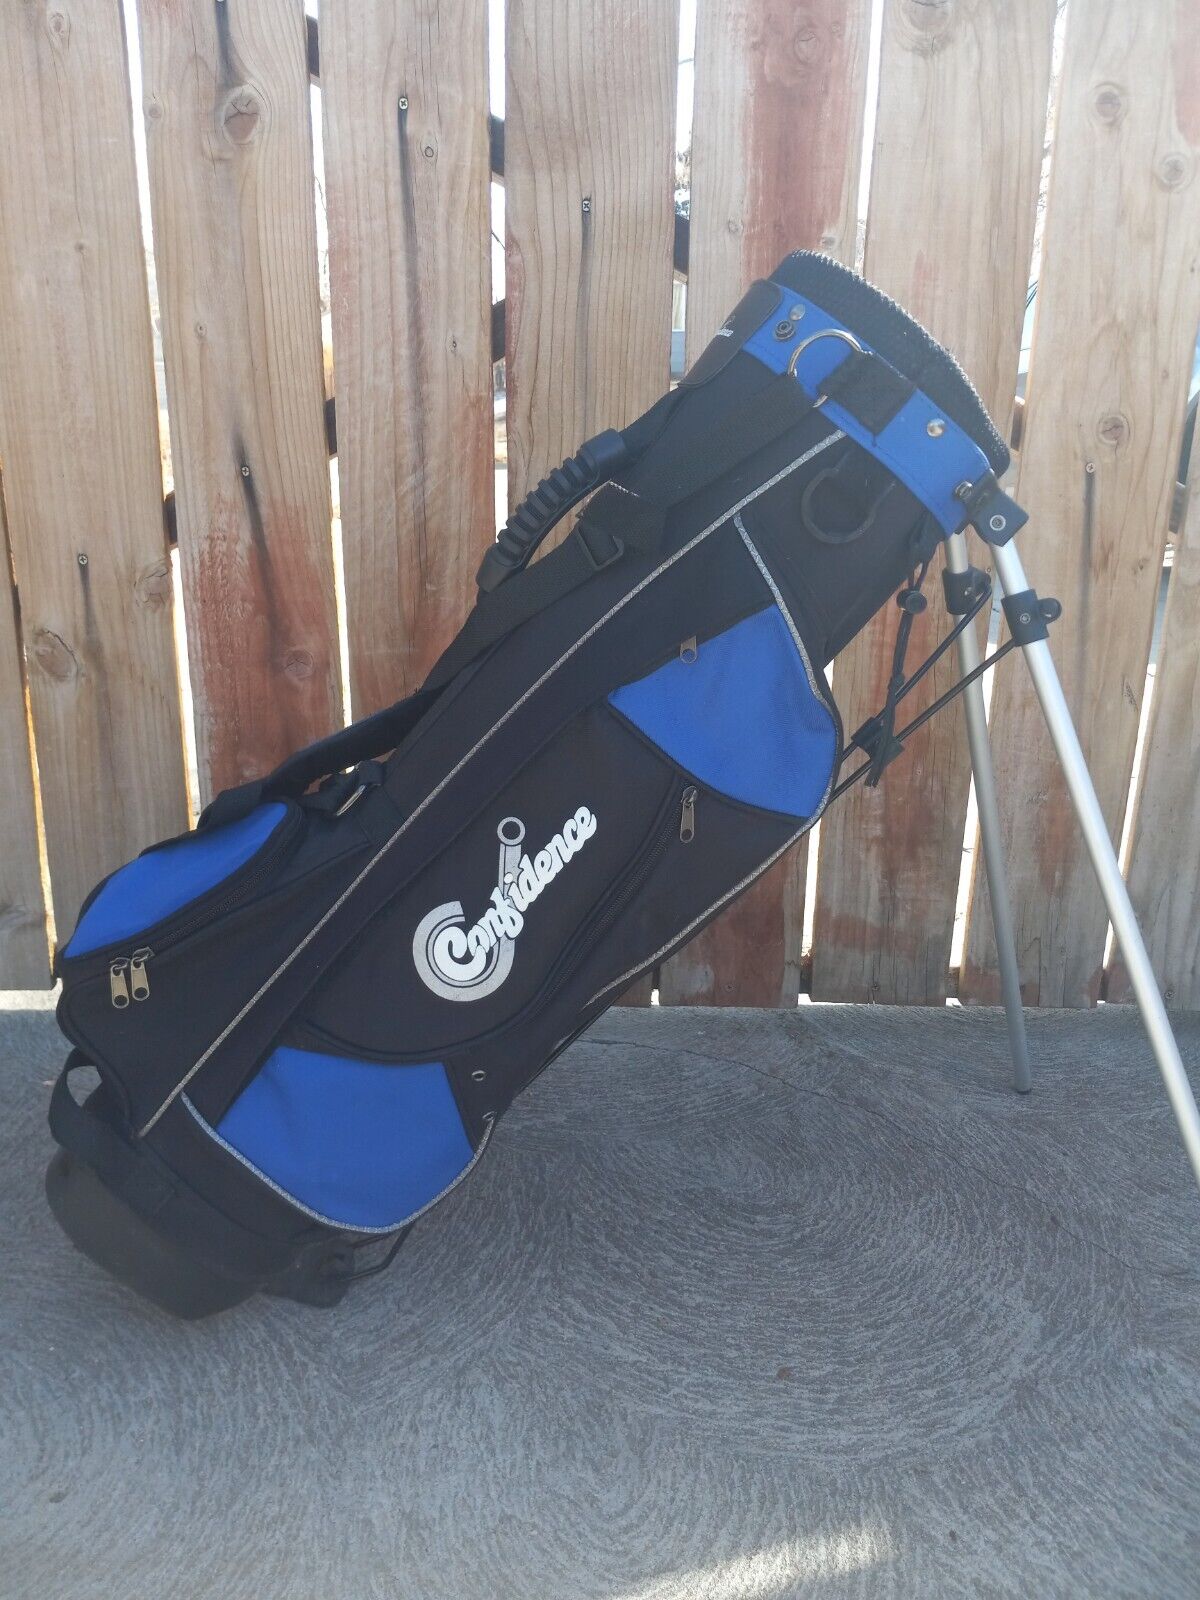 Confidence Kids Golf Bag 4 Way Divider Blue/ Black 30" Tall